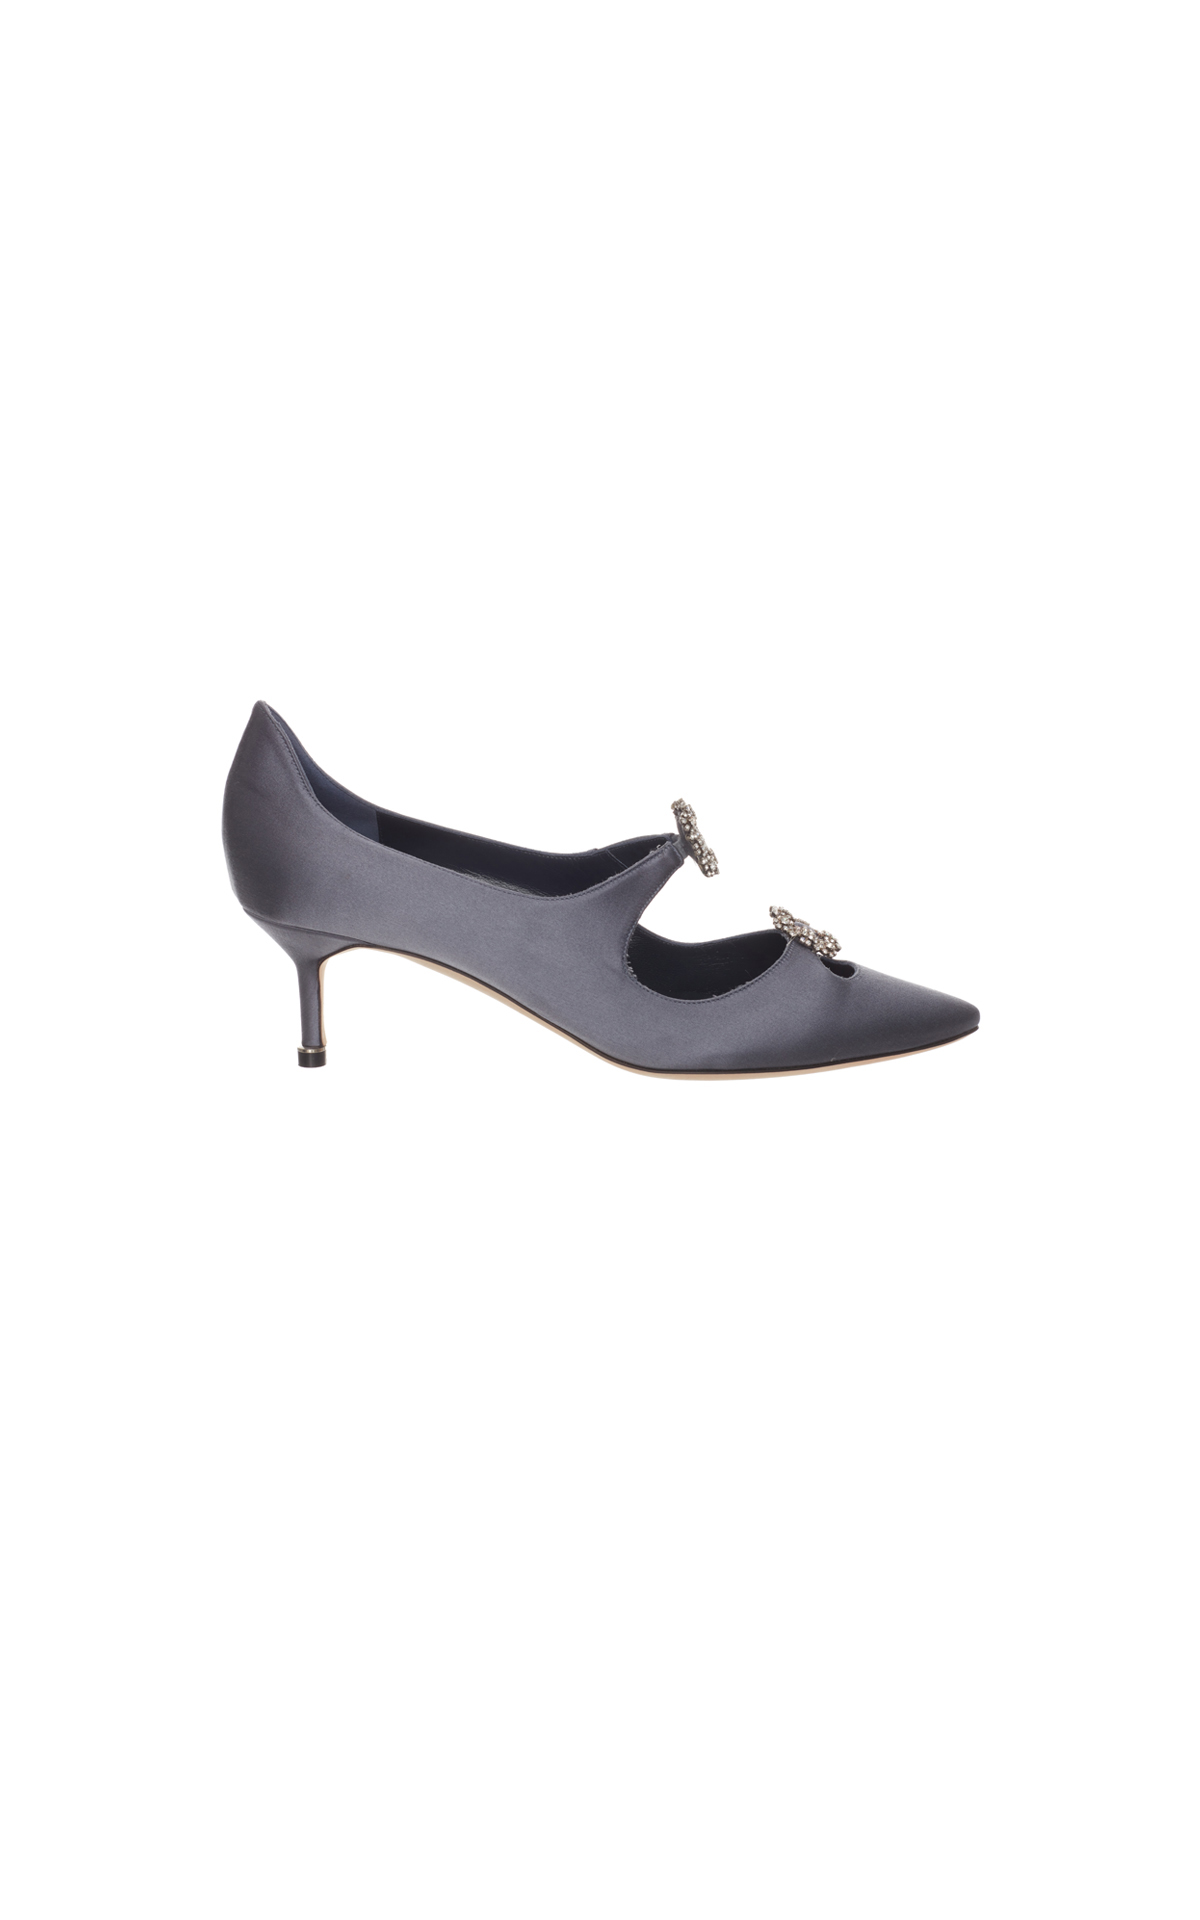 Manolo Blahnik Sirius grey medium heel from Bicester Village